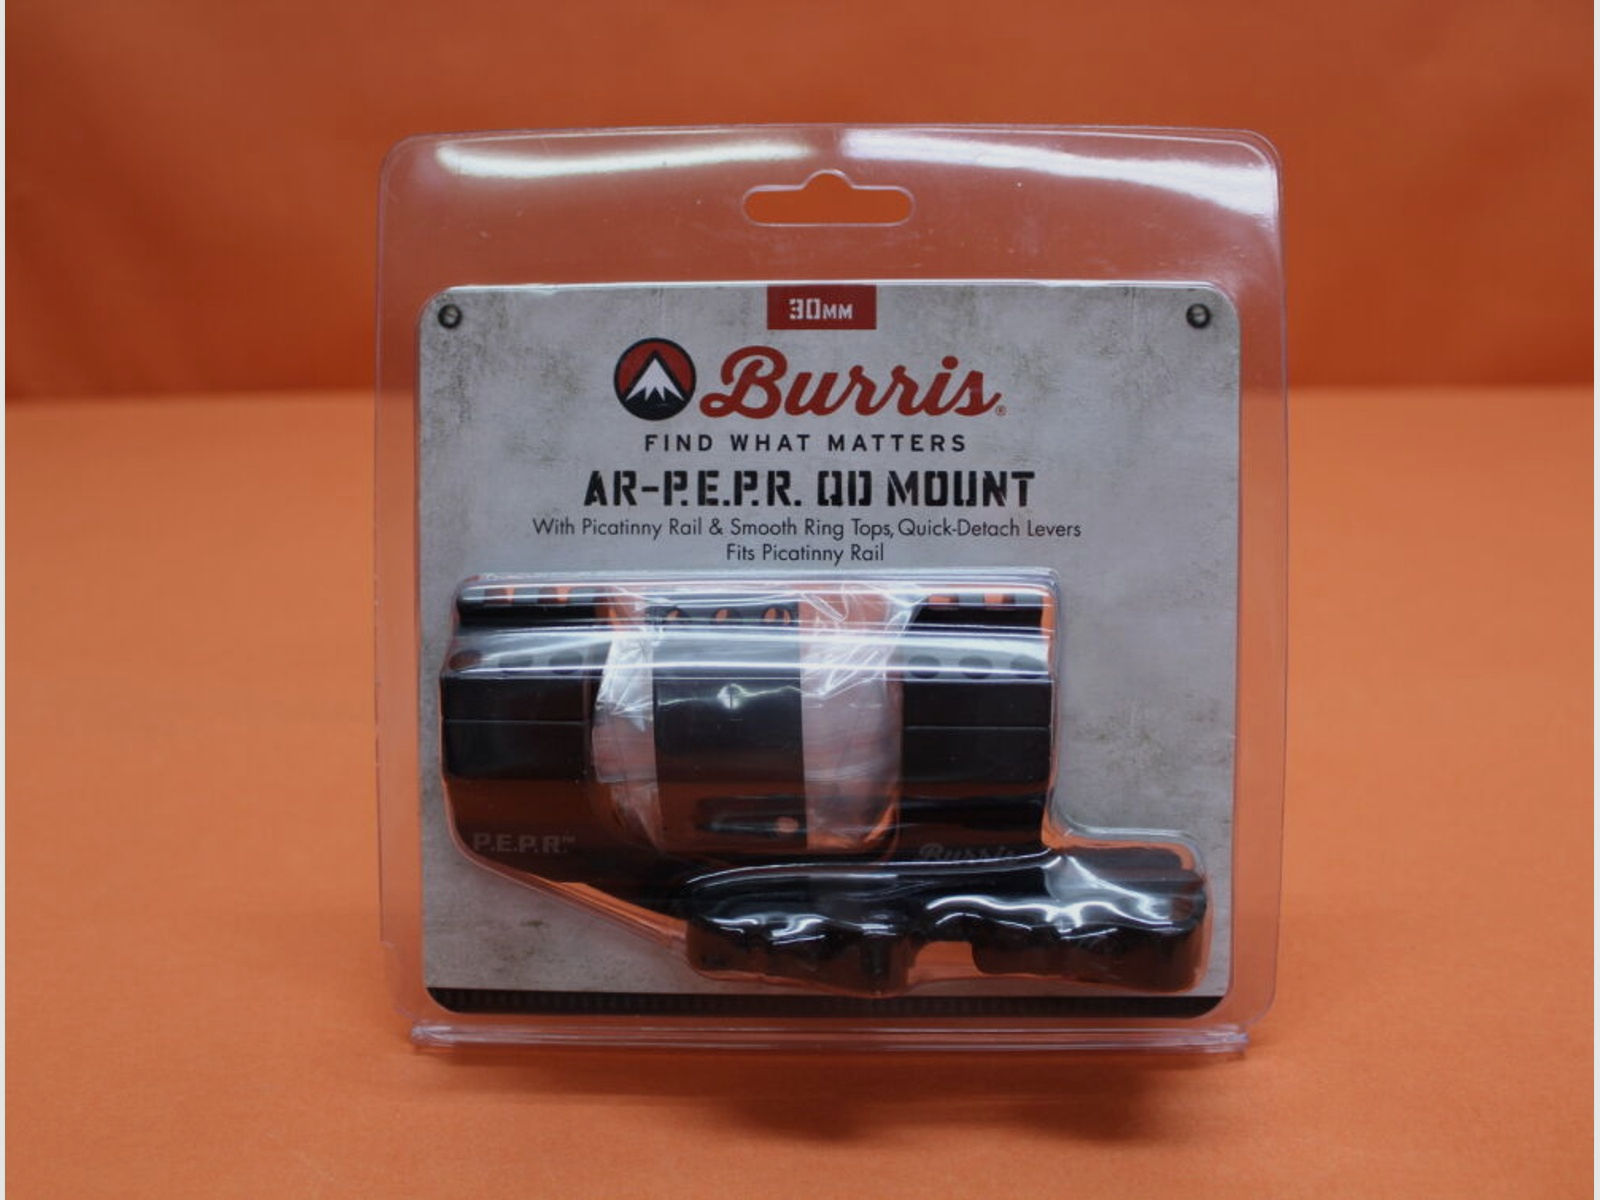 Burris	 Burris AR-PEPR QD Blockmontage 30mm (410342) Alu schwarz für Picatinnyprofil BH=1"/ 25,4mm